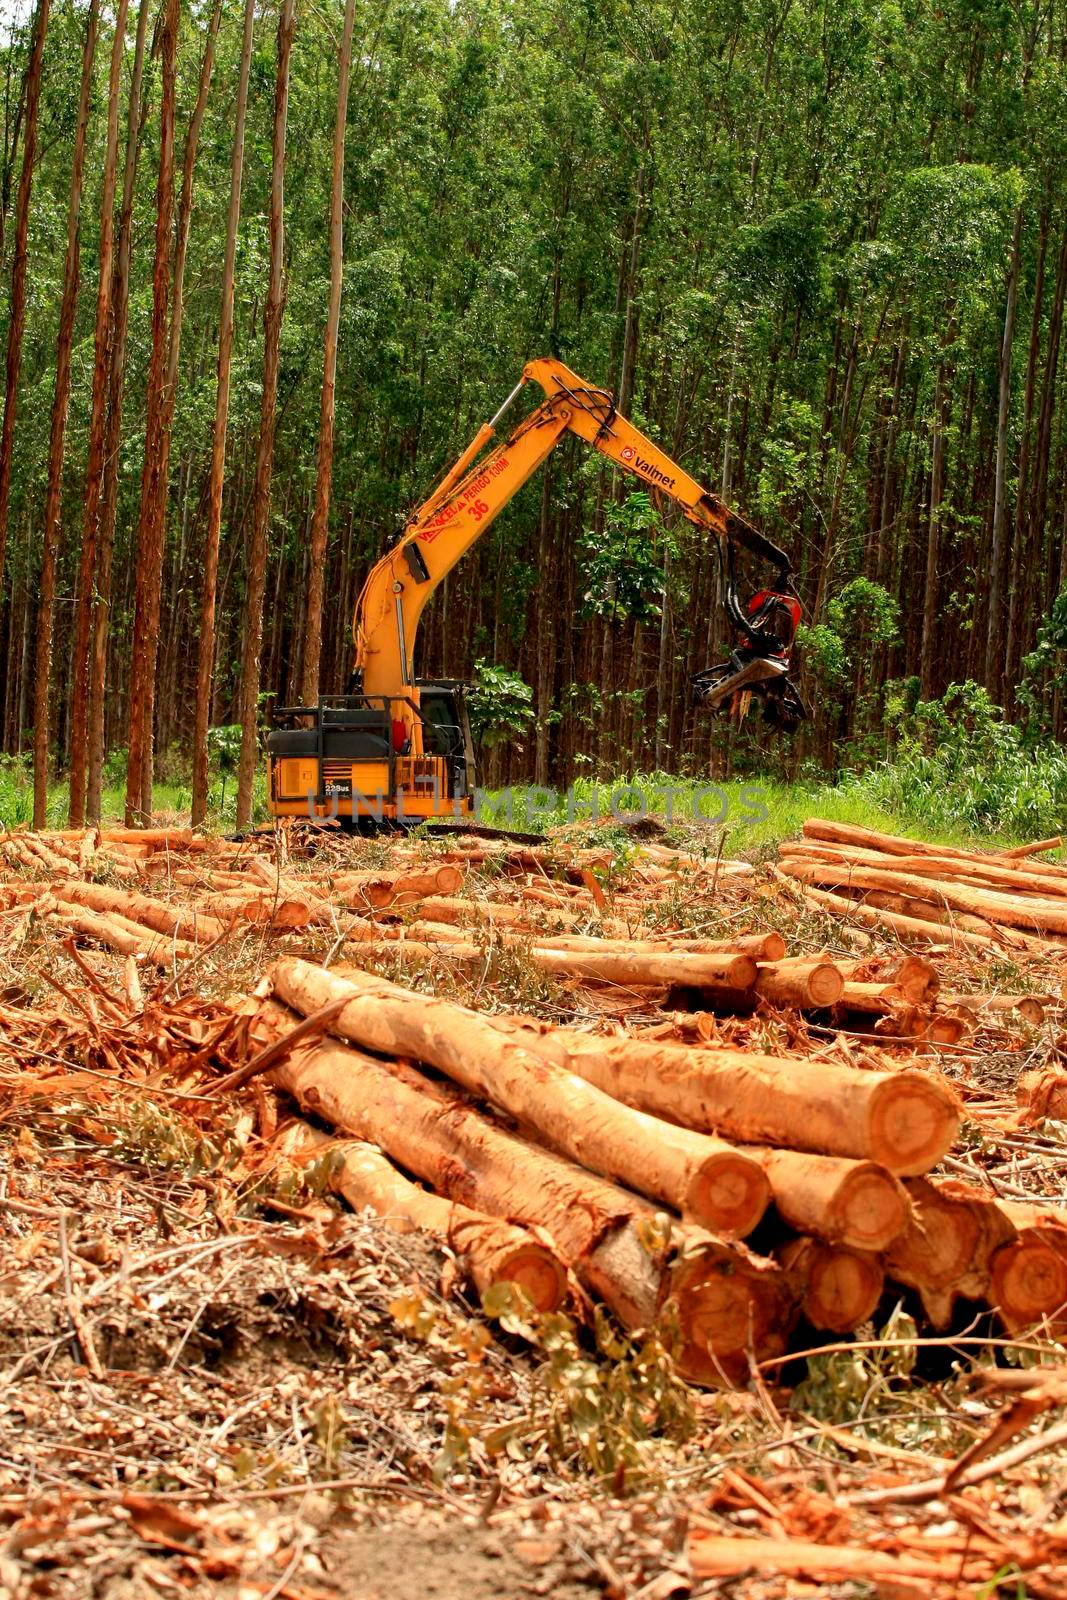 EUNAPOLIS, BAHIA / BRAZIL - January 19, 2009: Machine cuts down eucalyptus trees during harvesting of wood from a plantation at Veracel Celulose's farm in the city of Eunapolis.